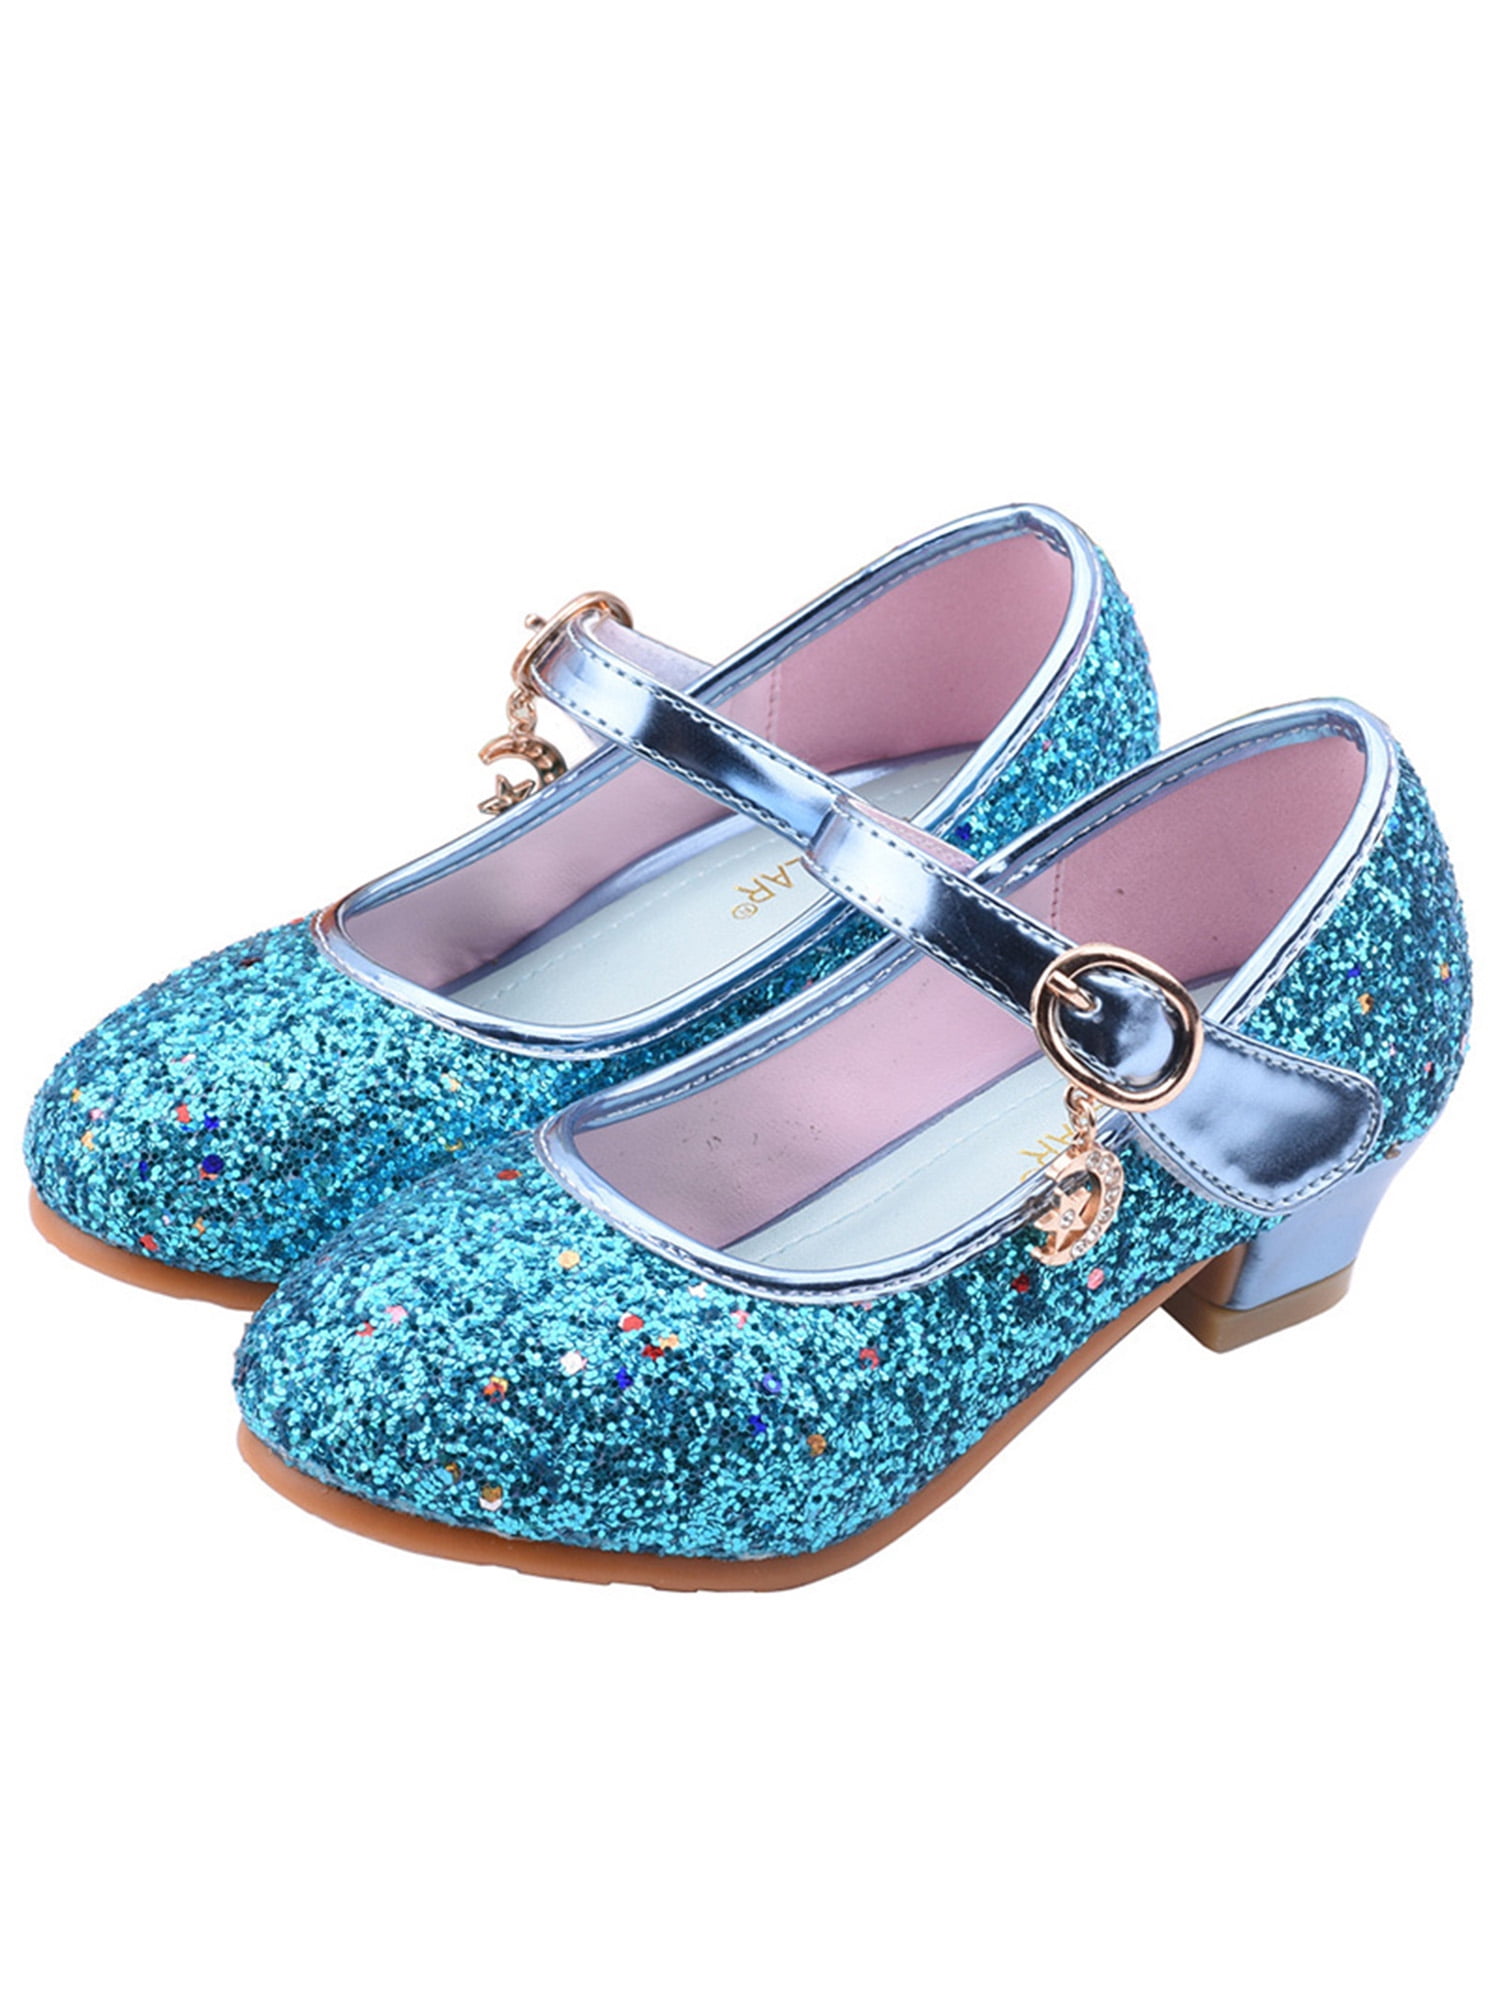 Girls Dress Shoes Mary Jane Wedding Party Shoes Glitter Bridesmaids Princess Heels Toddler/Little Kid/Big Kid 